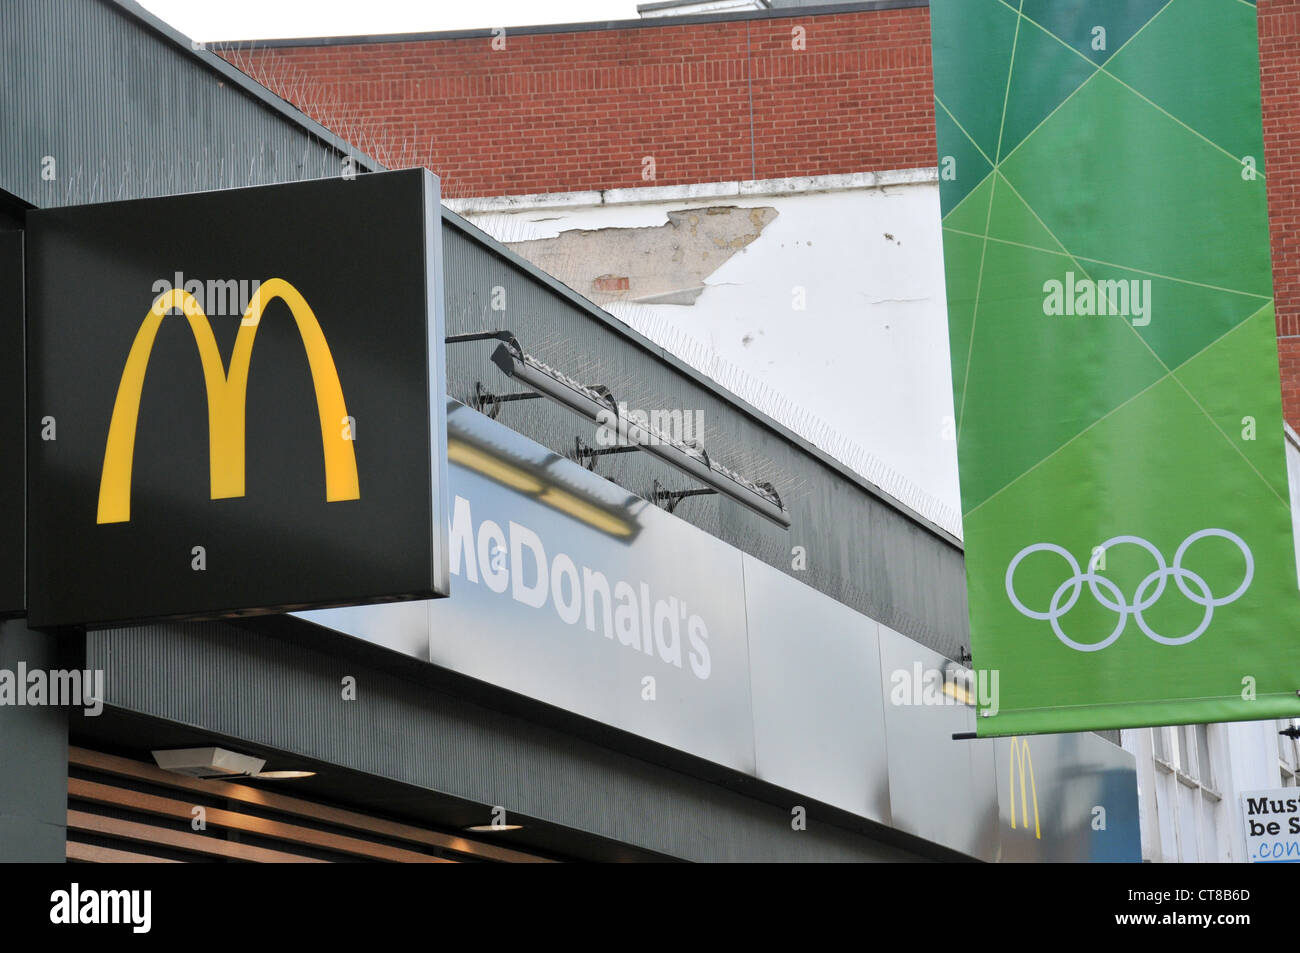 McDonald's Olympia sponsor Sponsoring London 2012 Olympics Worldwide Partner Stockfoto